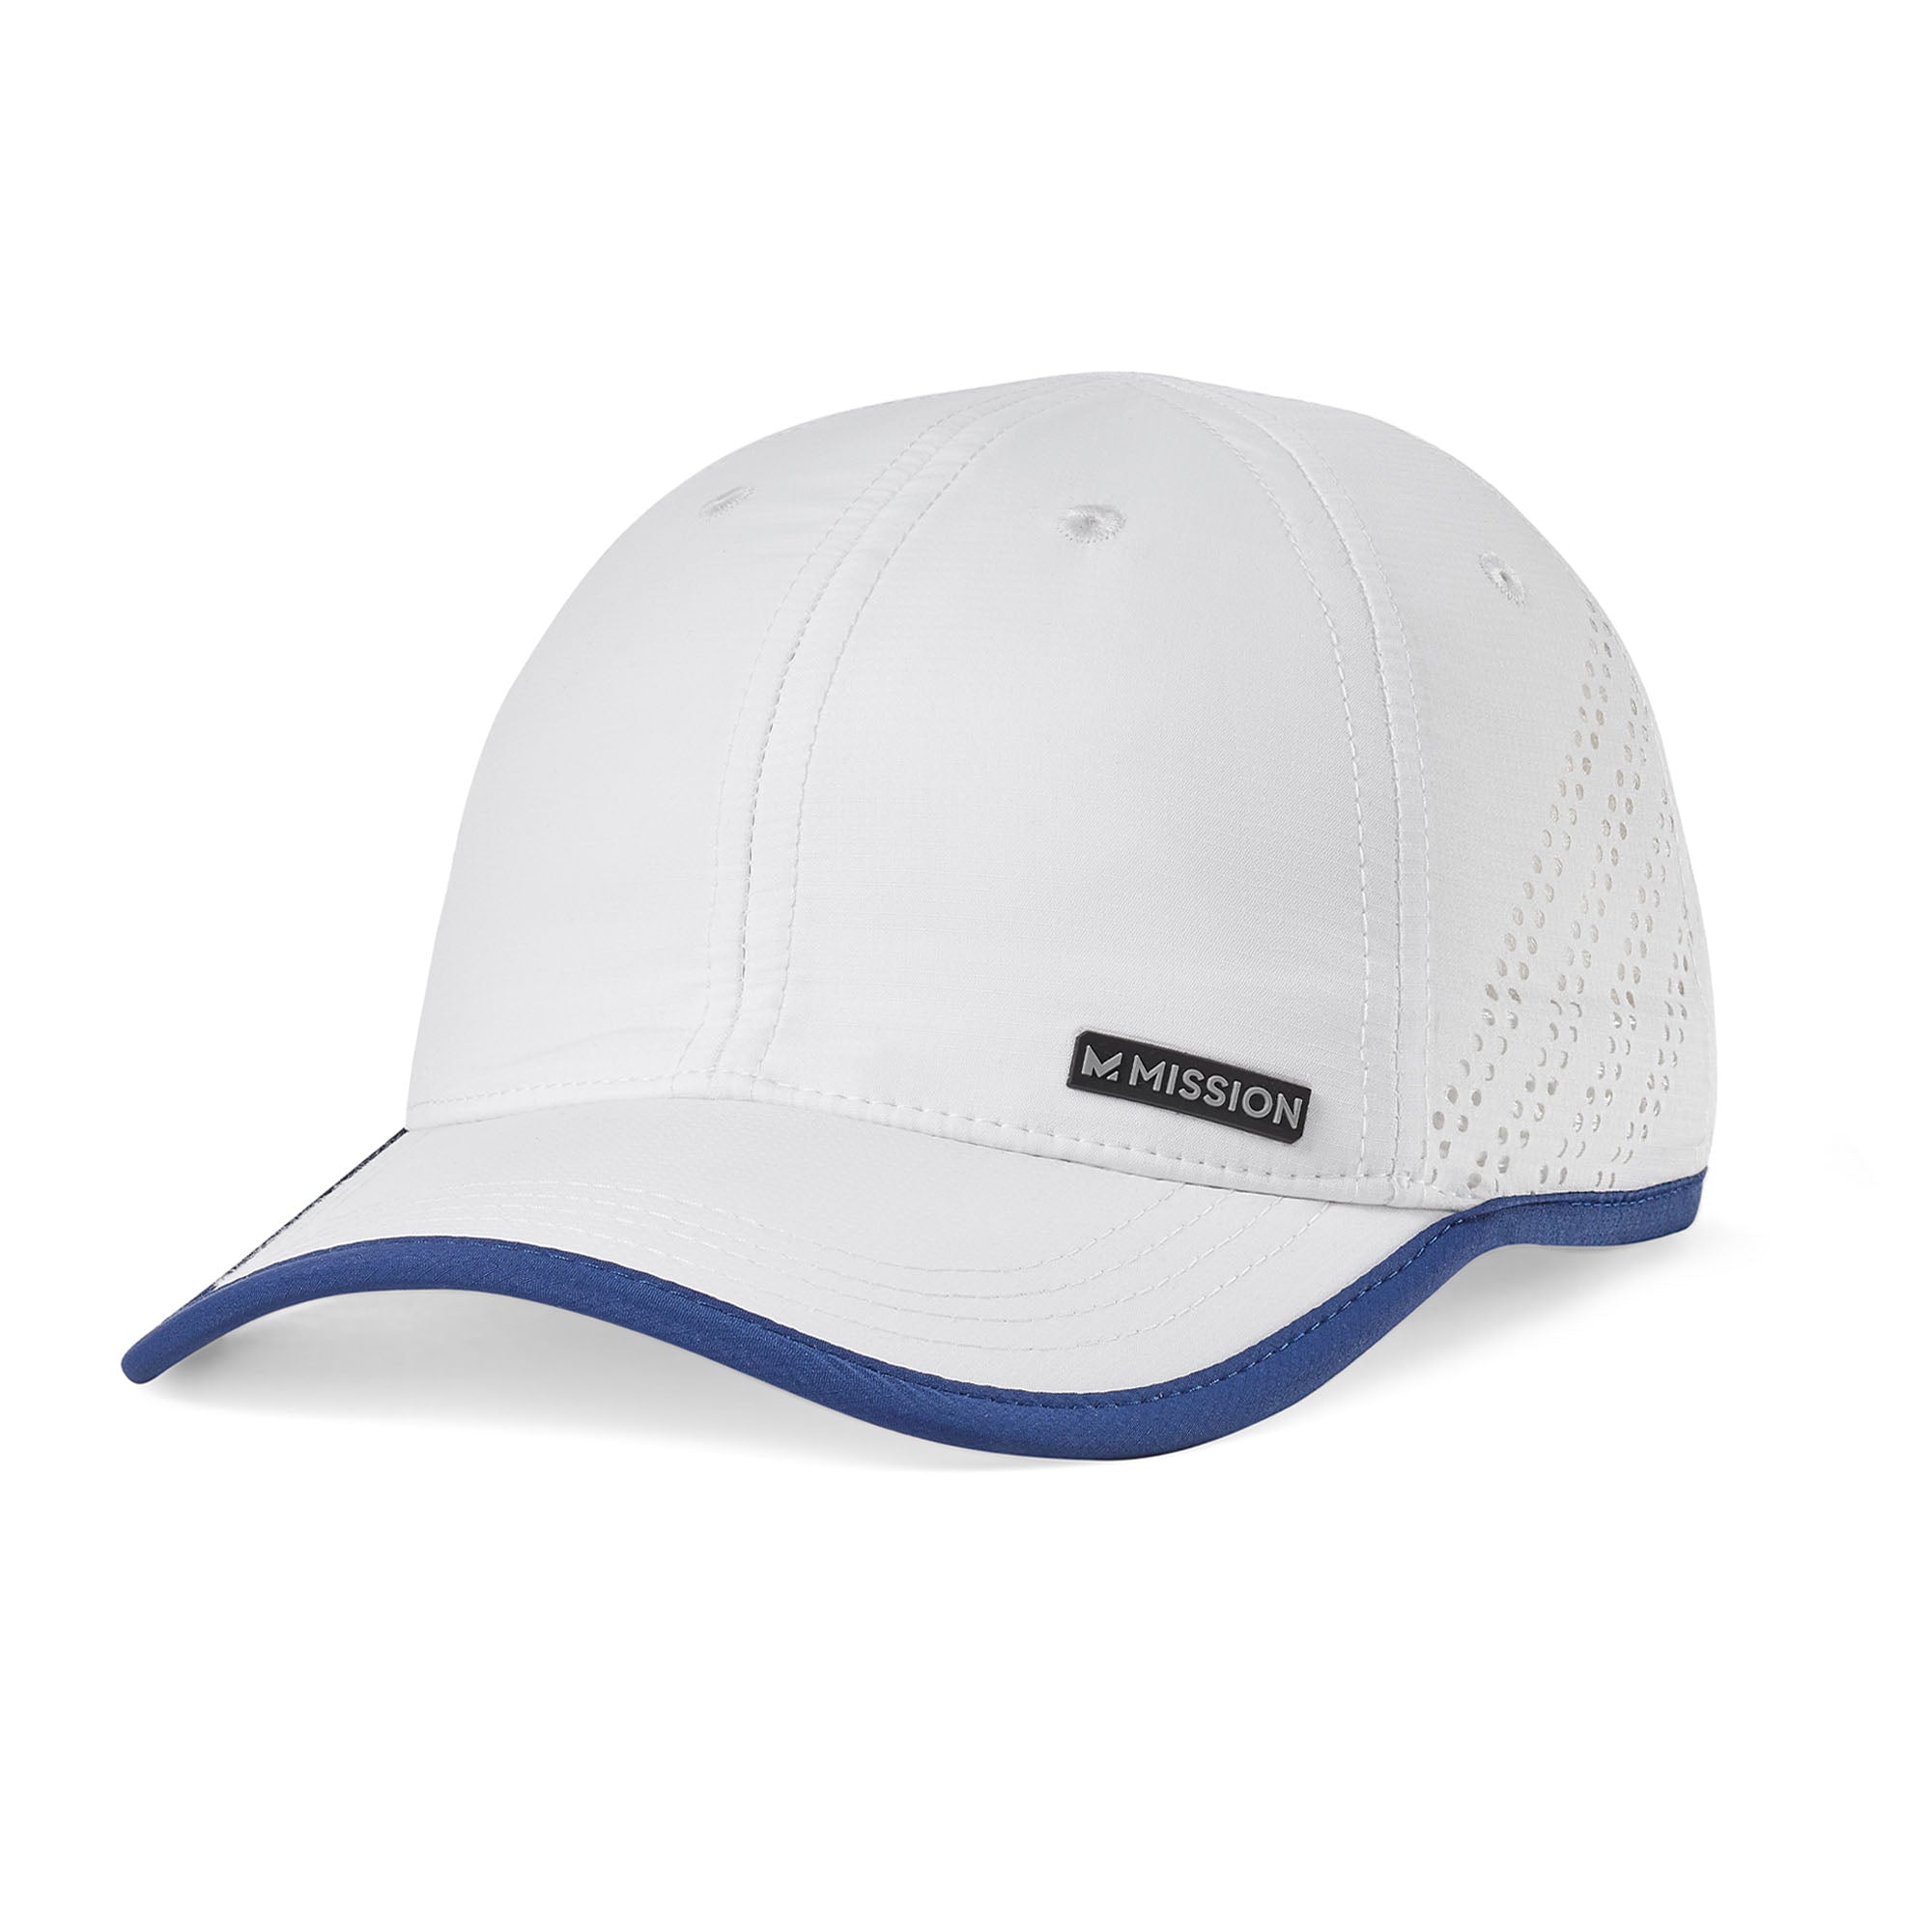 Cooling Marathon Hat Caps MISSION One Size Bright White / Estate Blue 